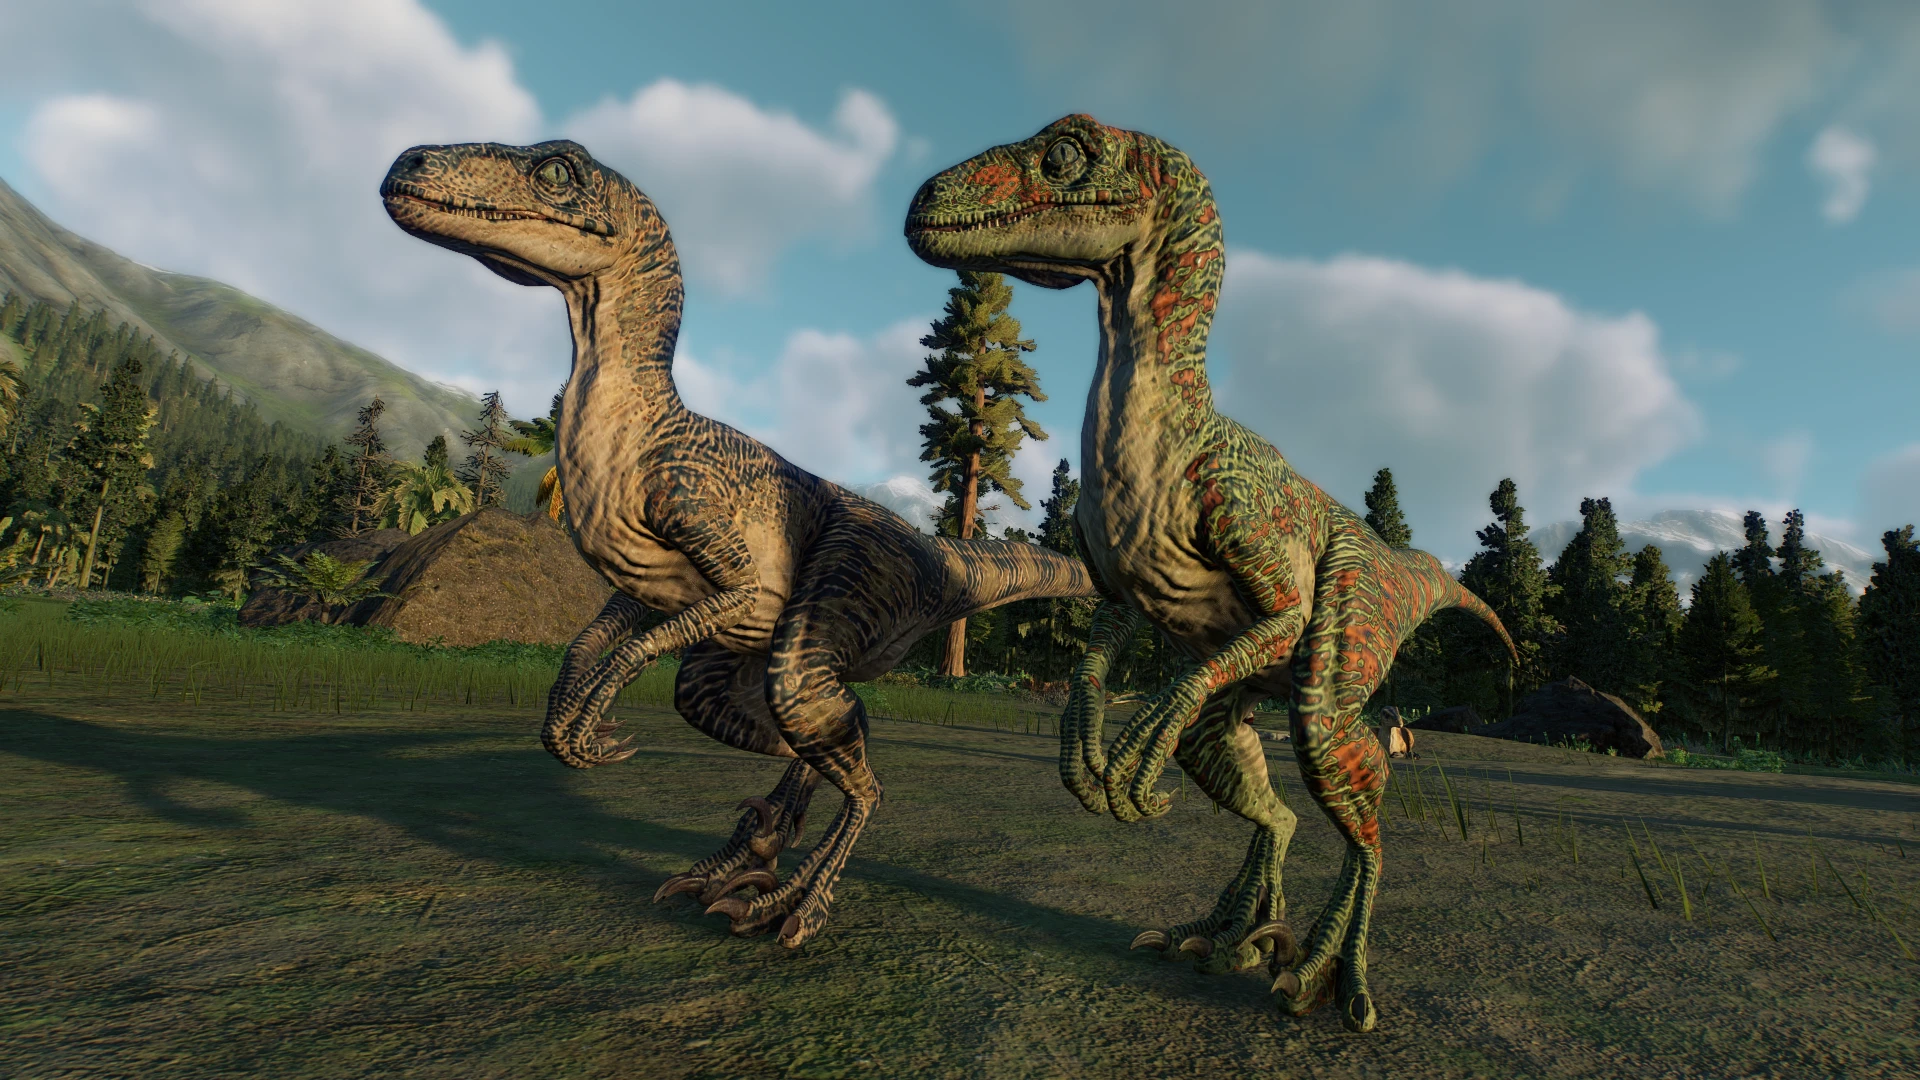 Jurassic Park Deinonychus At Jurassic World Evolution 2 Nexus Mods And Community 